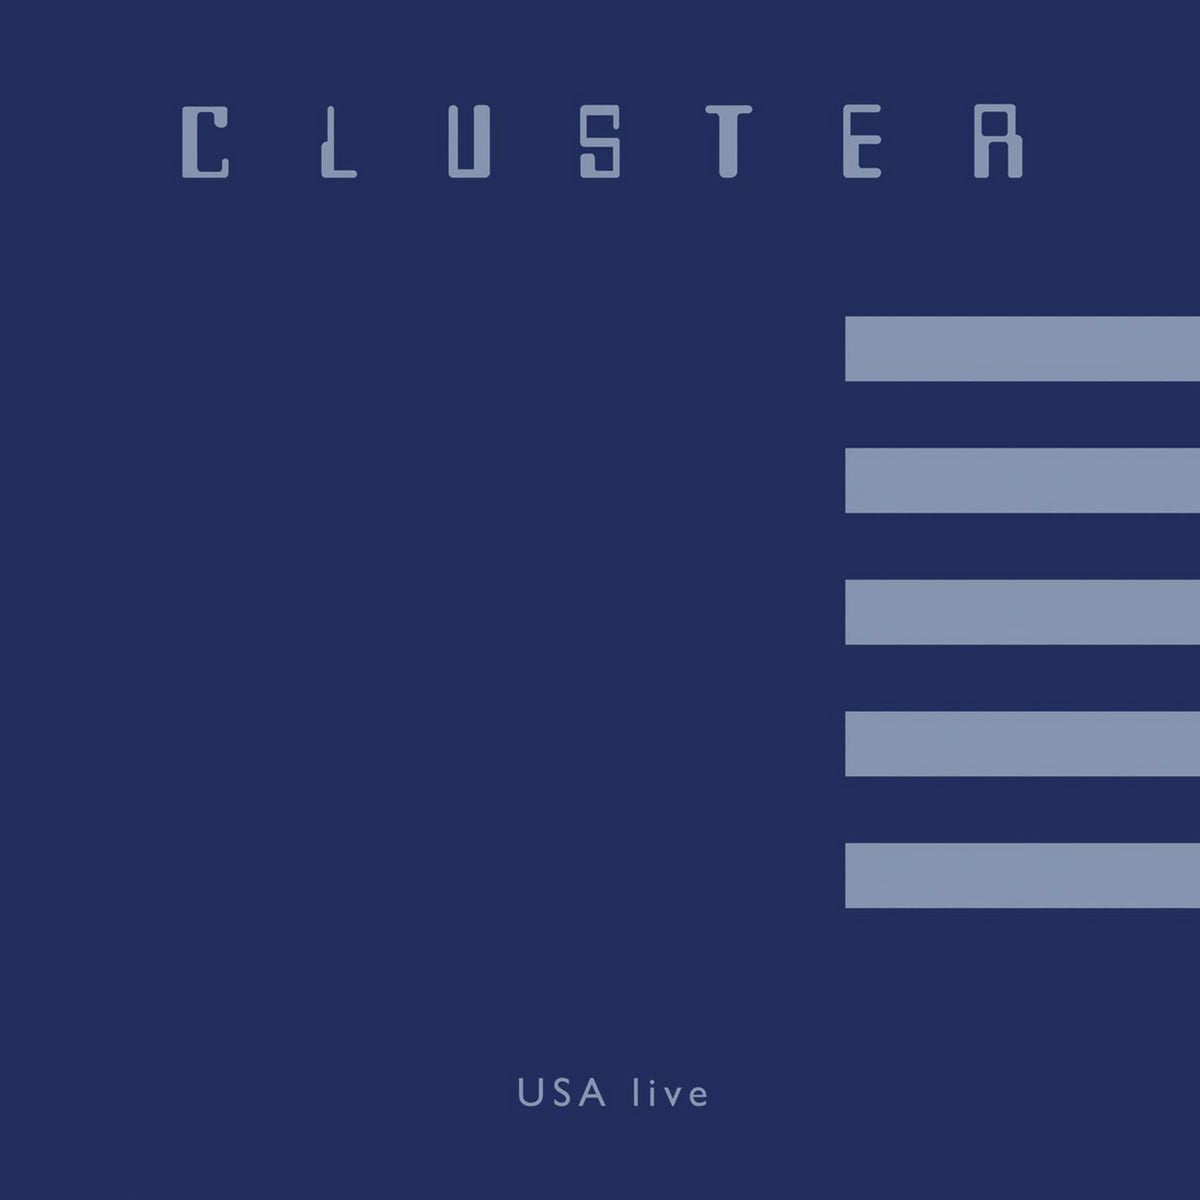 CLUSTER - "USA LIVE" LP